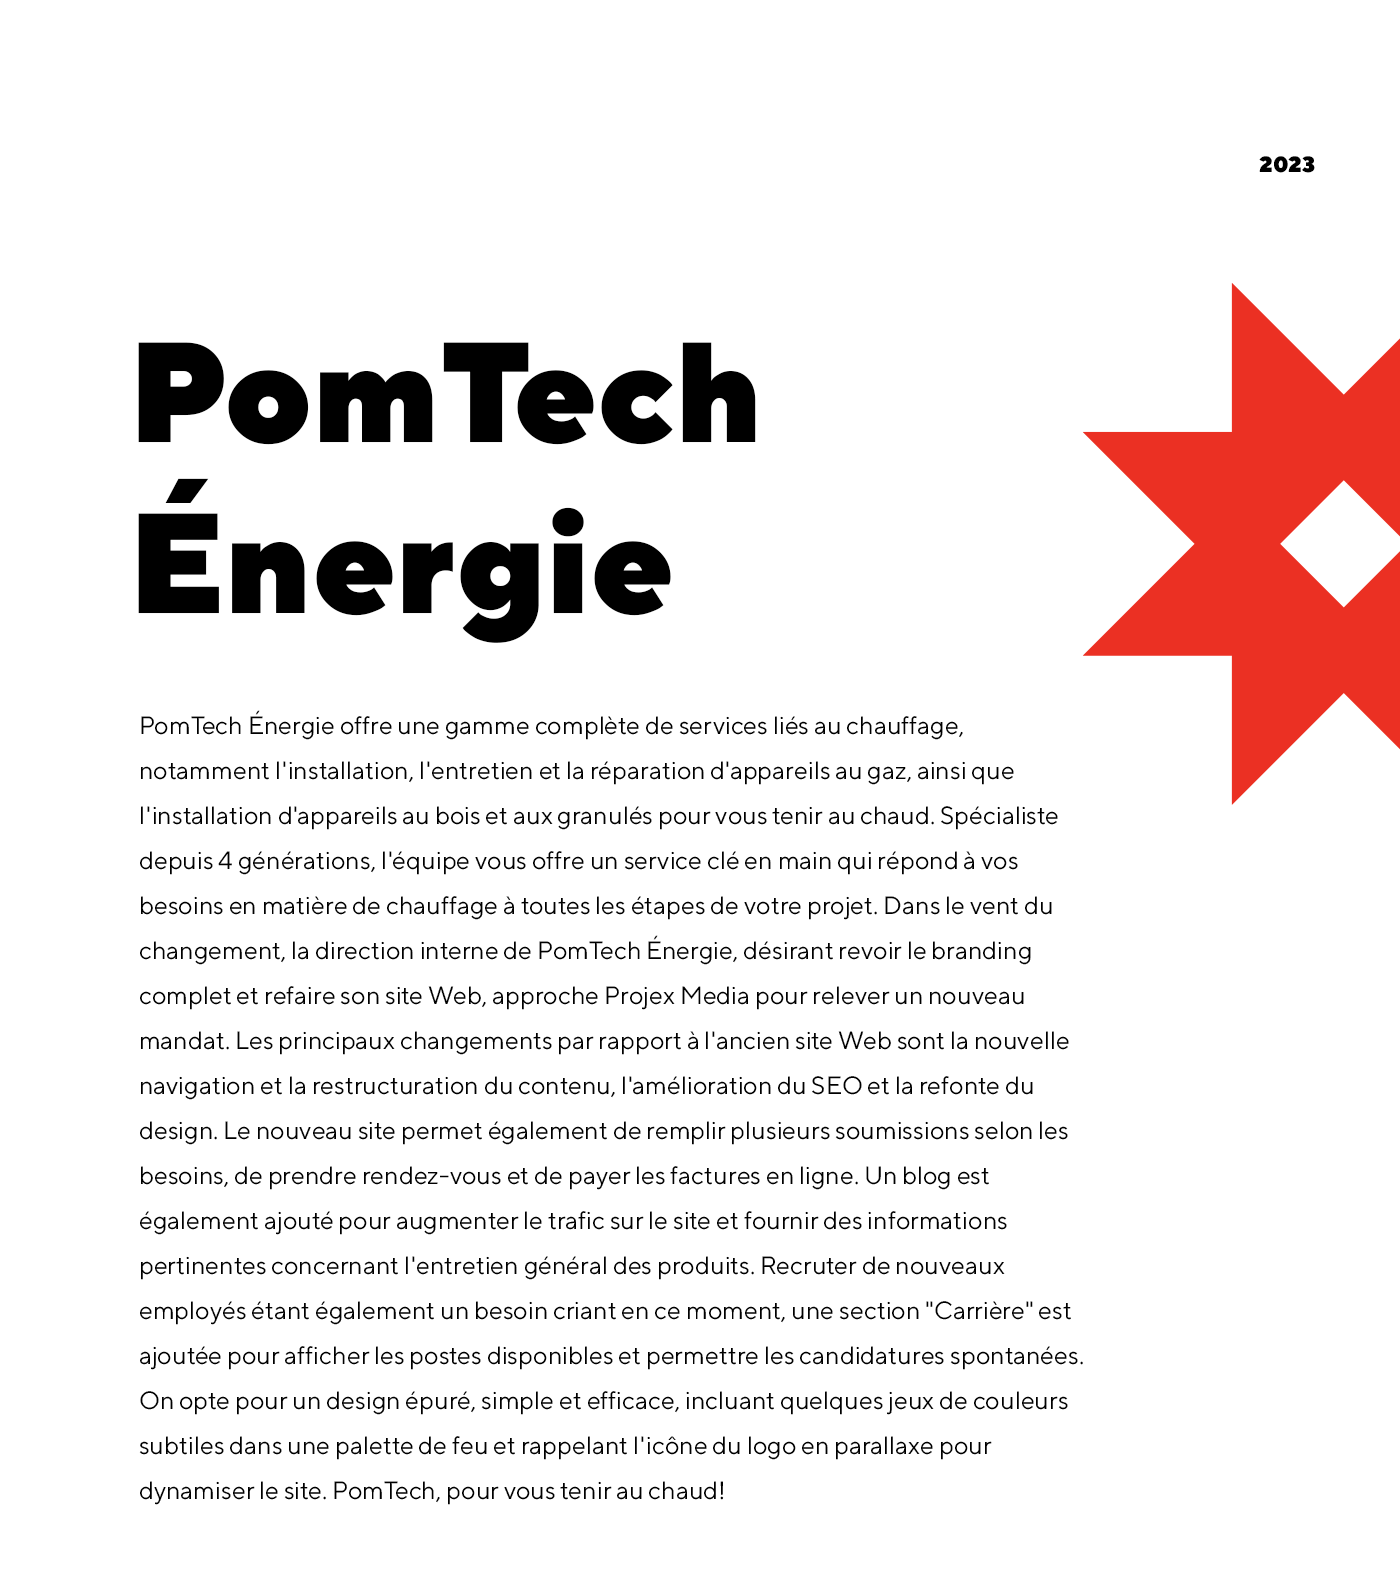 PomTech Énergie / 2023 - Réalisation signée Projex Media